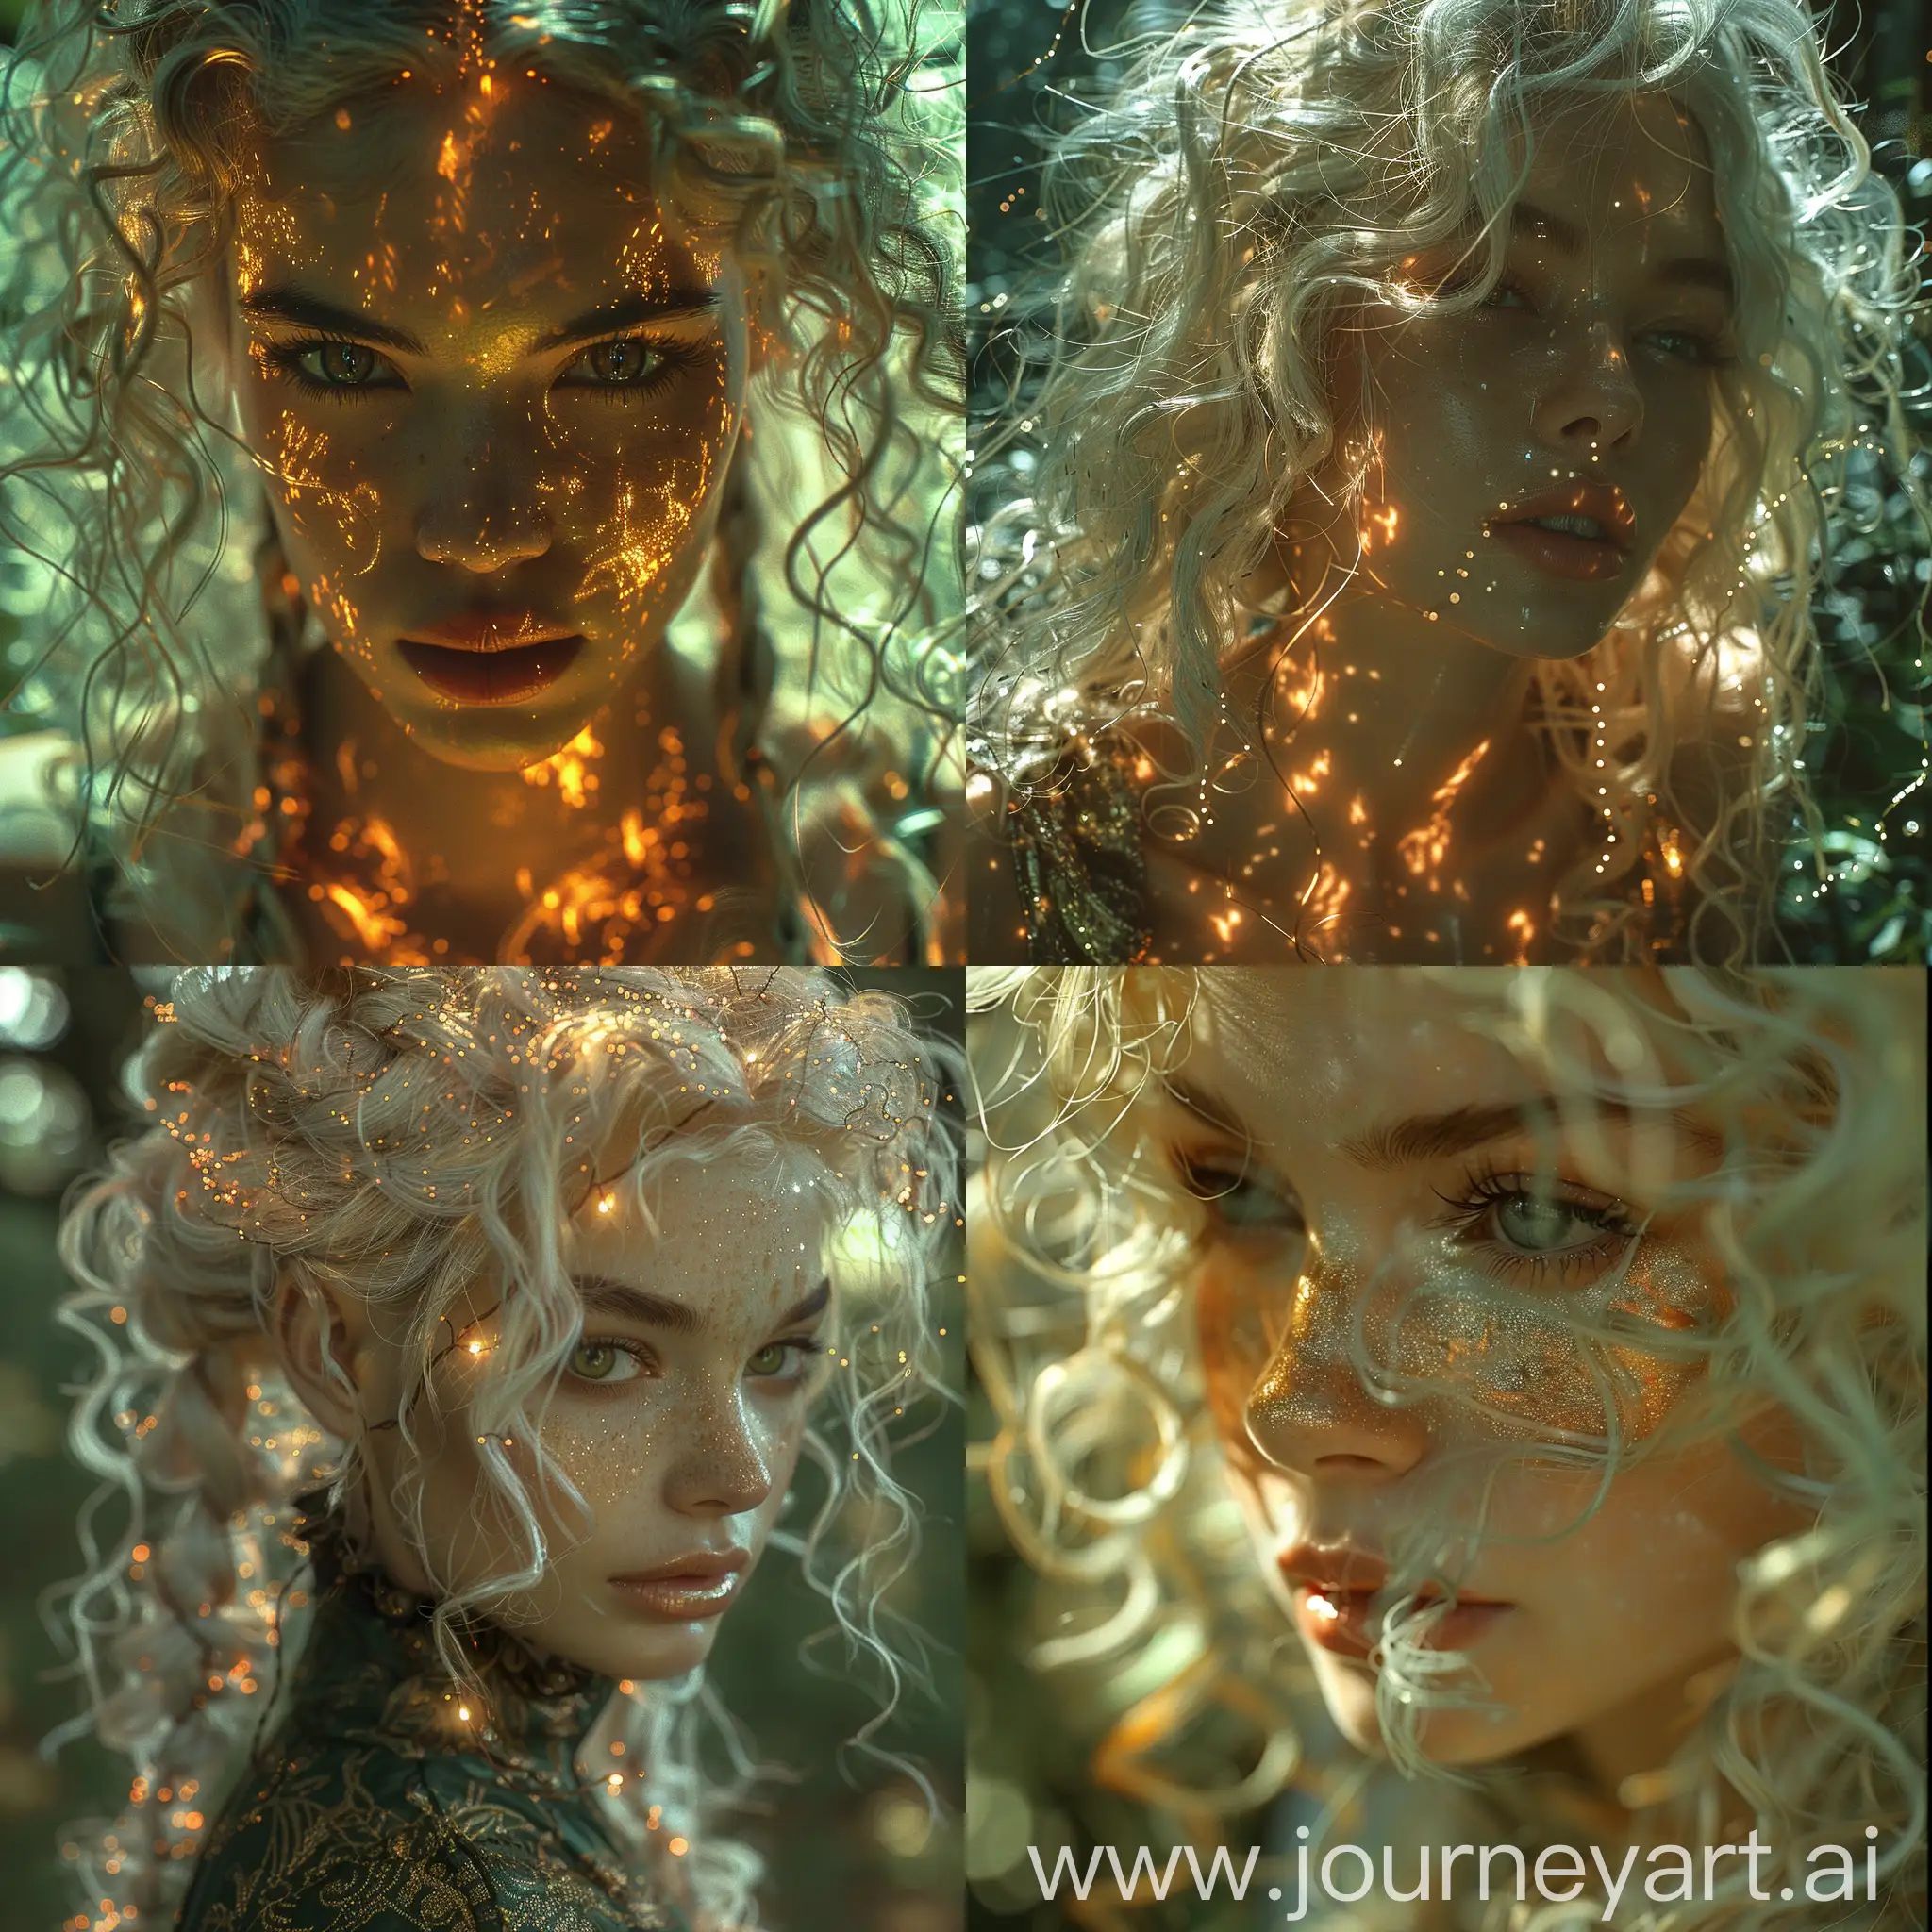 Fiery-WhiteHaired-Woman-in-Earthy-Forest-Light